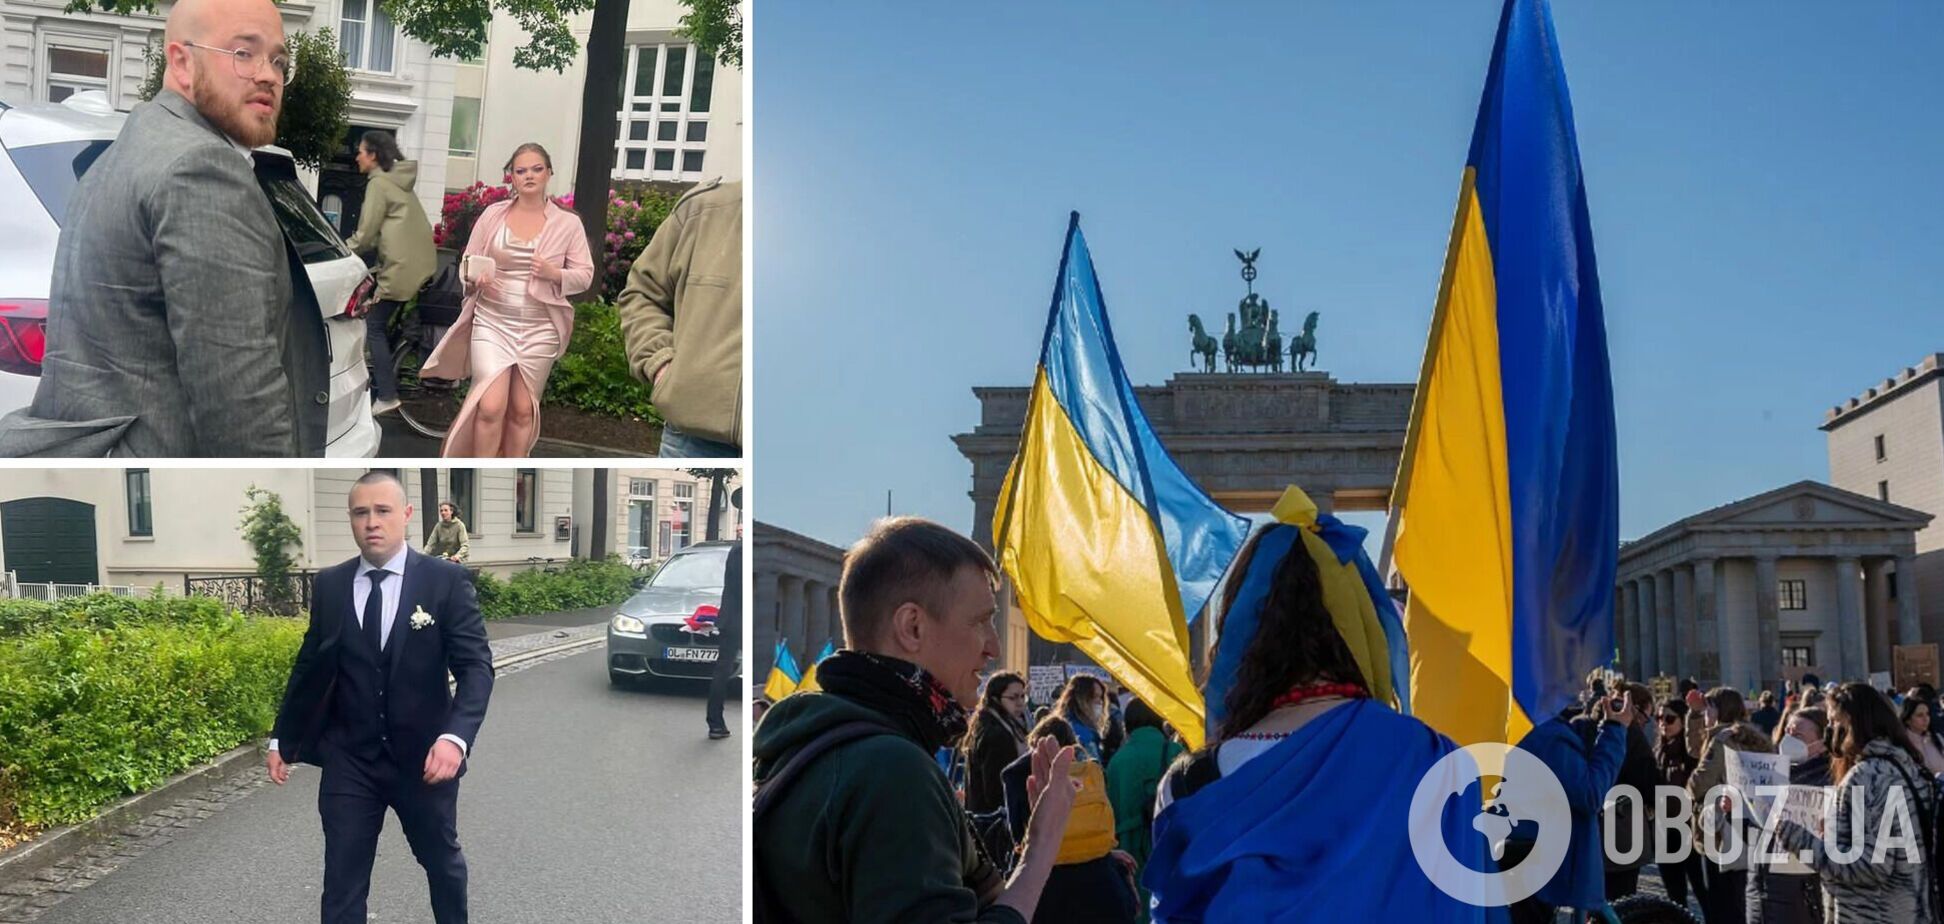 Обижали, повалили на землю и пинали ногами: в Германии россияне напали на украинца из-за замечаний